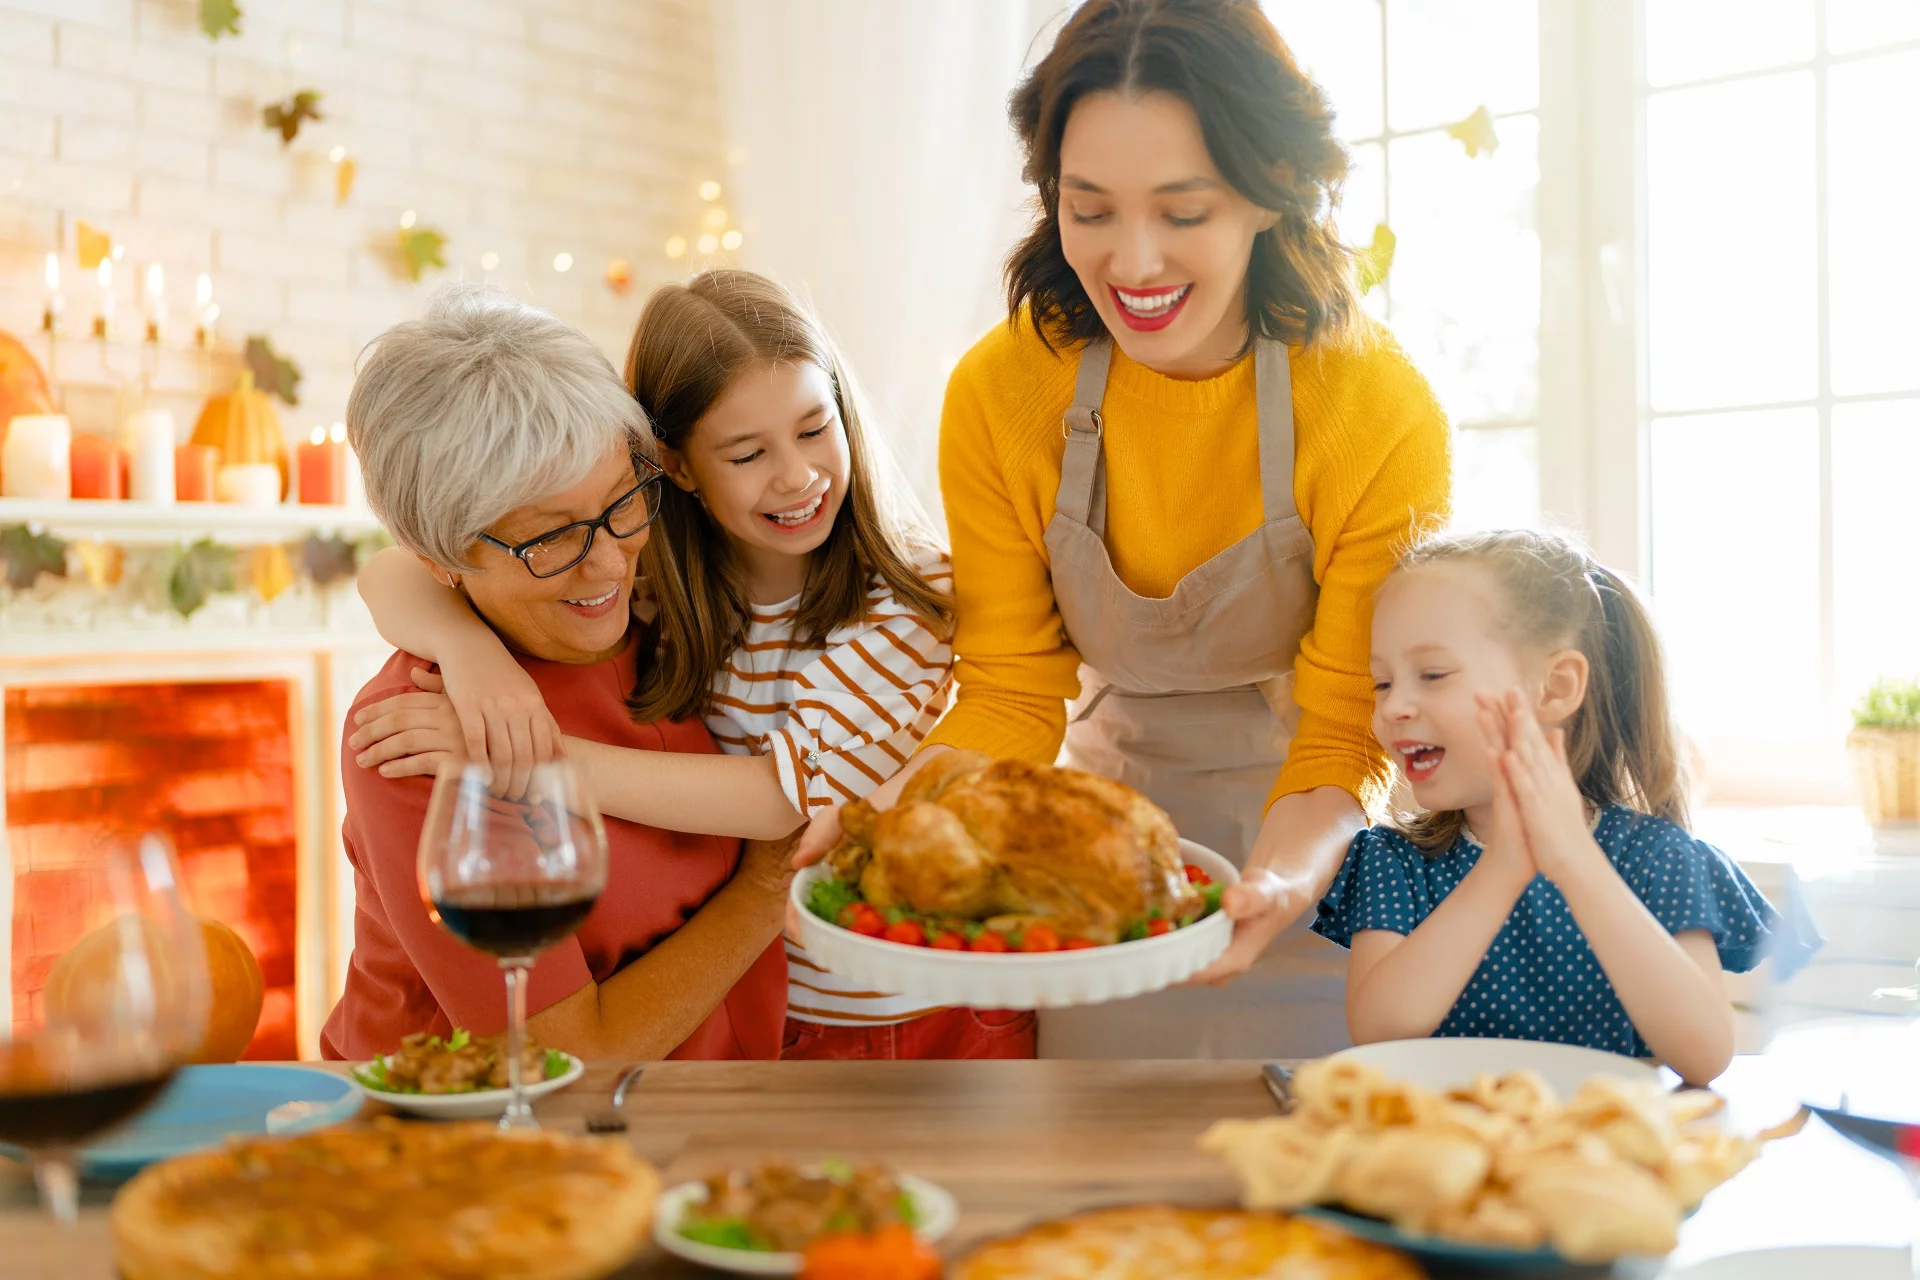 4 Unique Ways to Tweak Thanksgiving Traditions